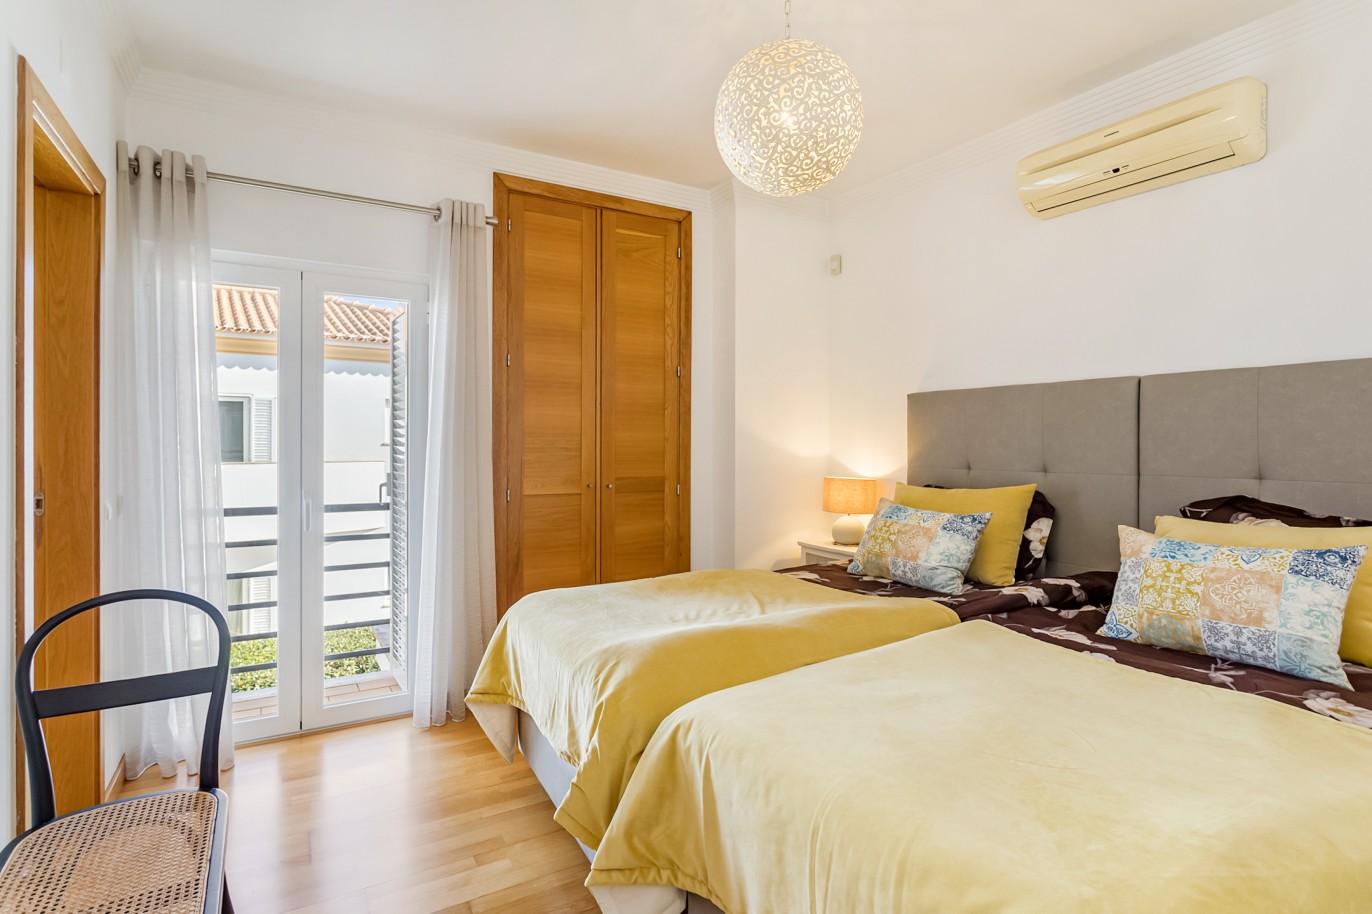 4 bedroom detached villa with pool for sale in Albufeira, Algarve_214360